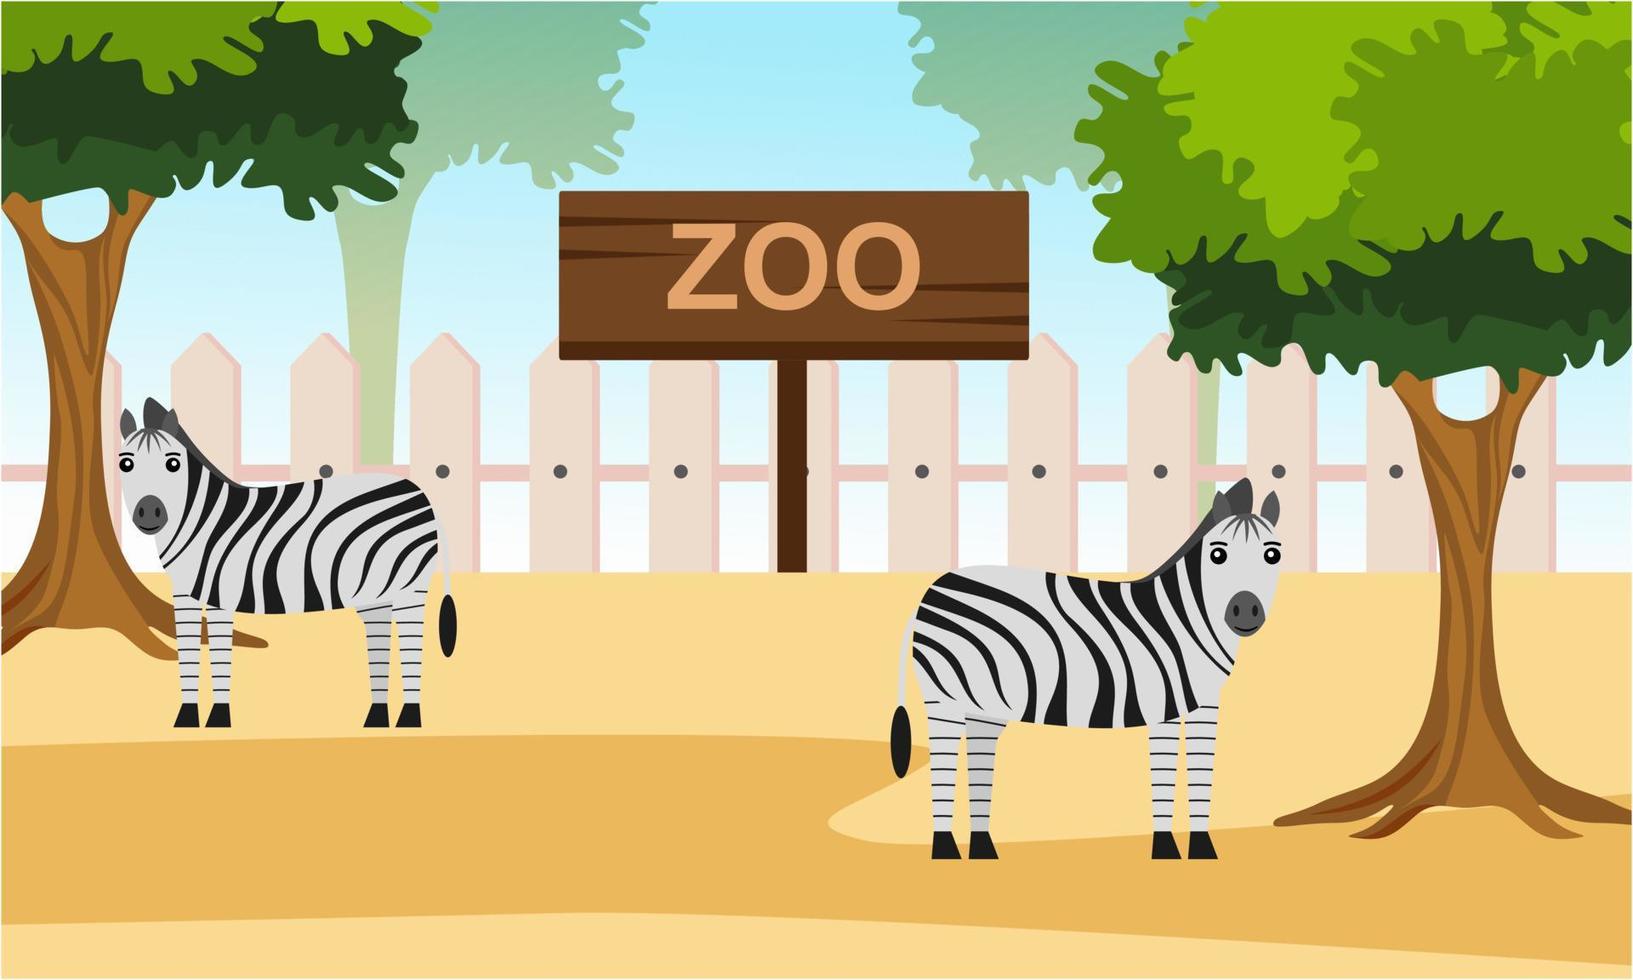 Zoo cartoon illustration with safari animals on forest background vector